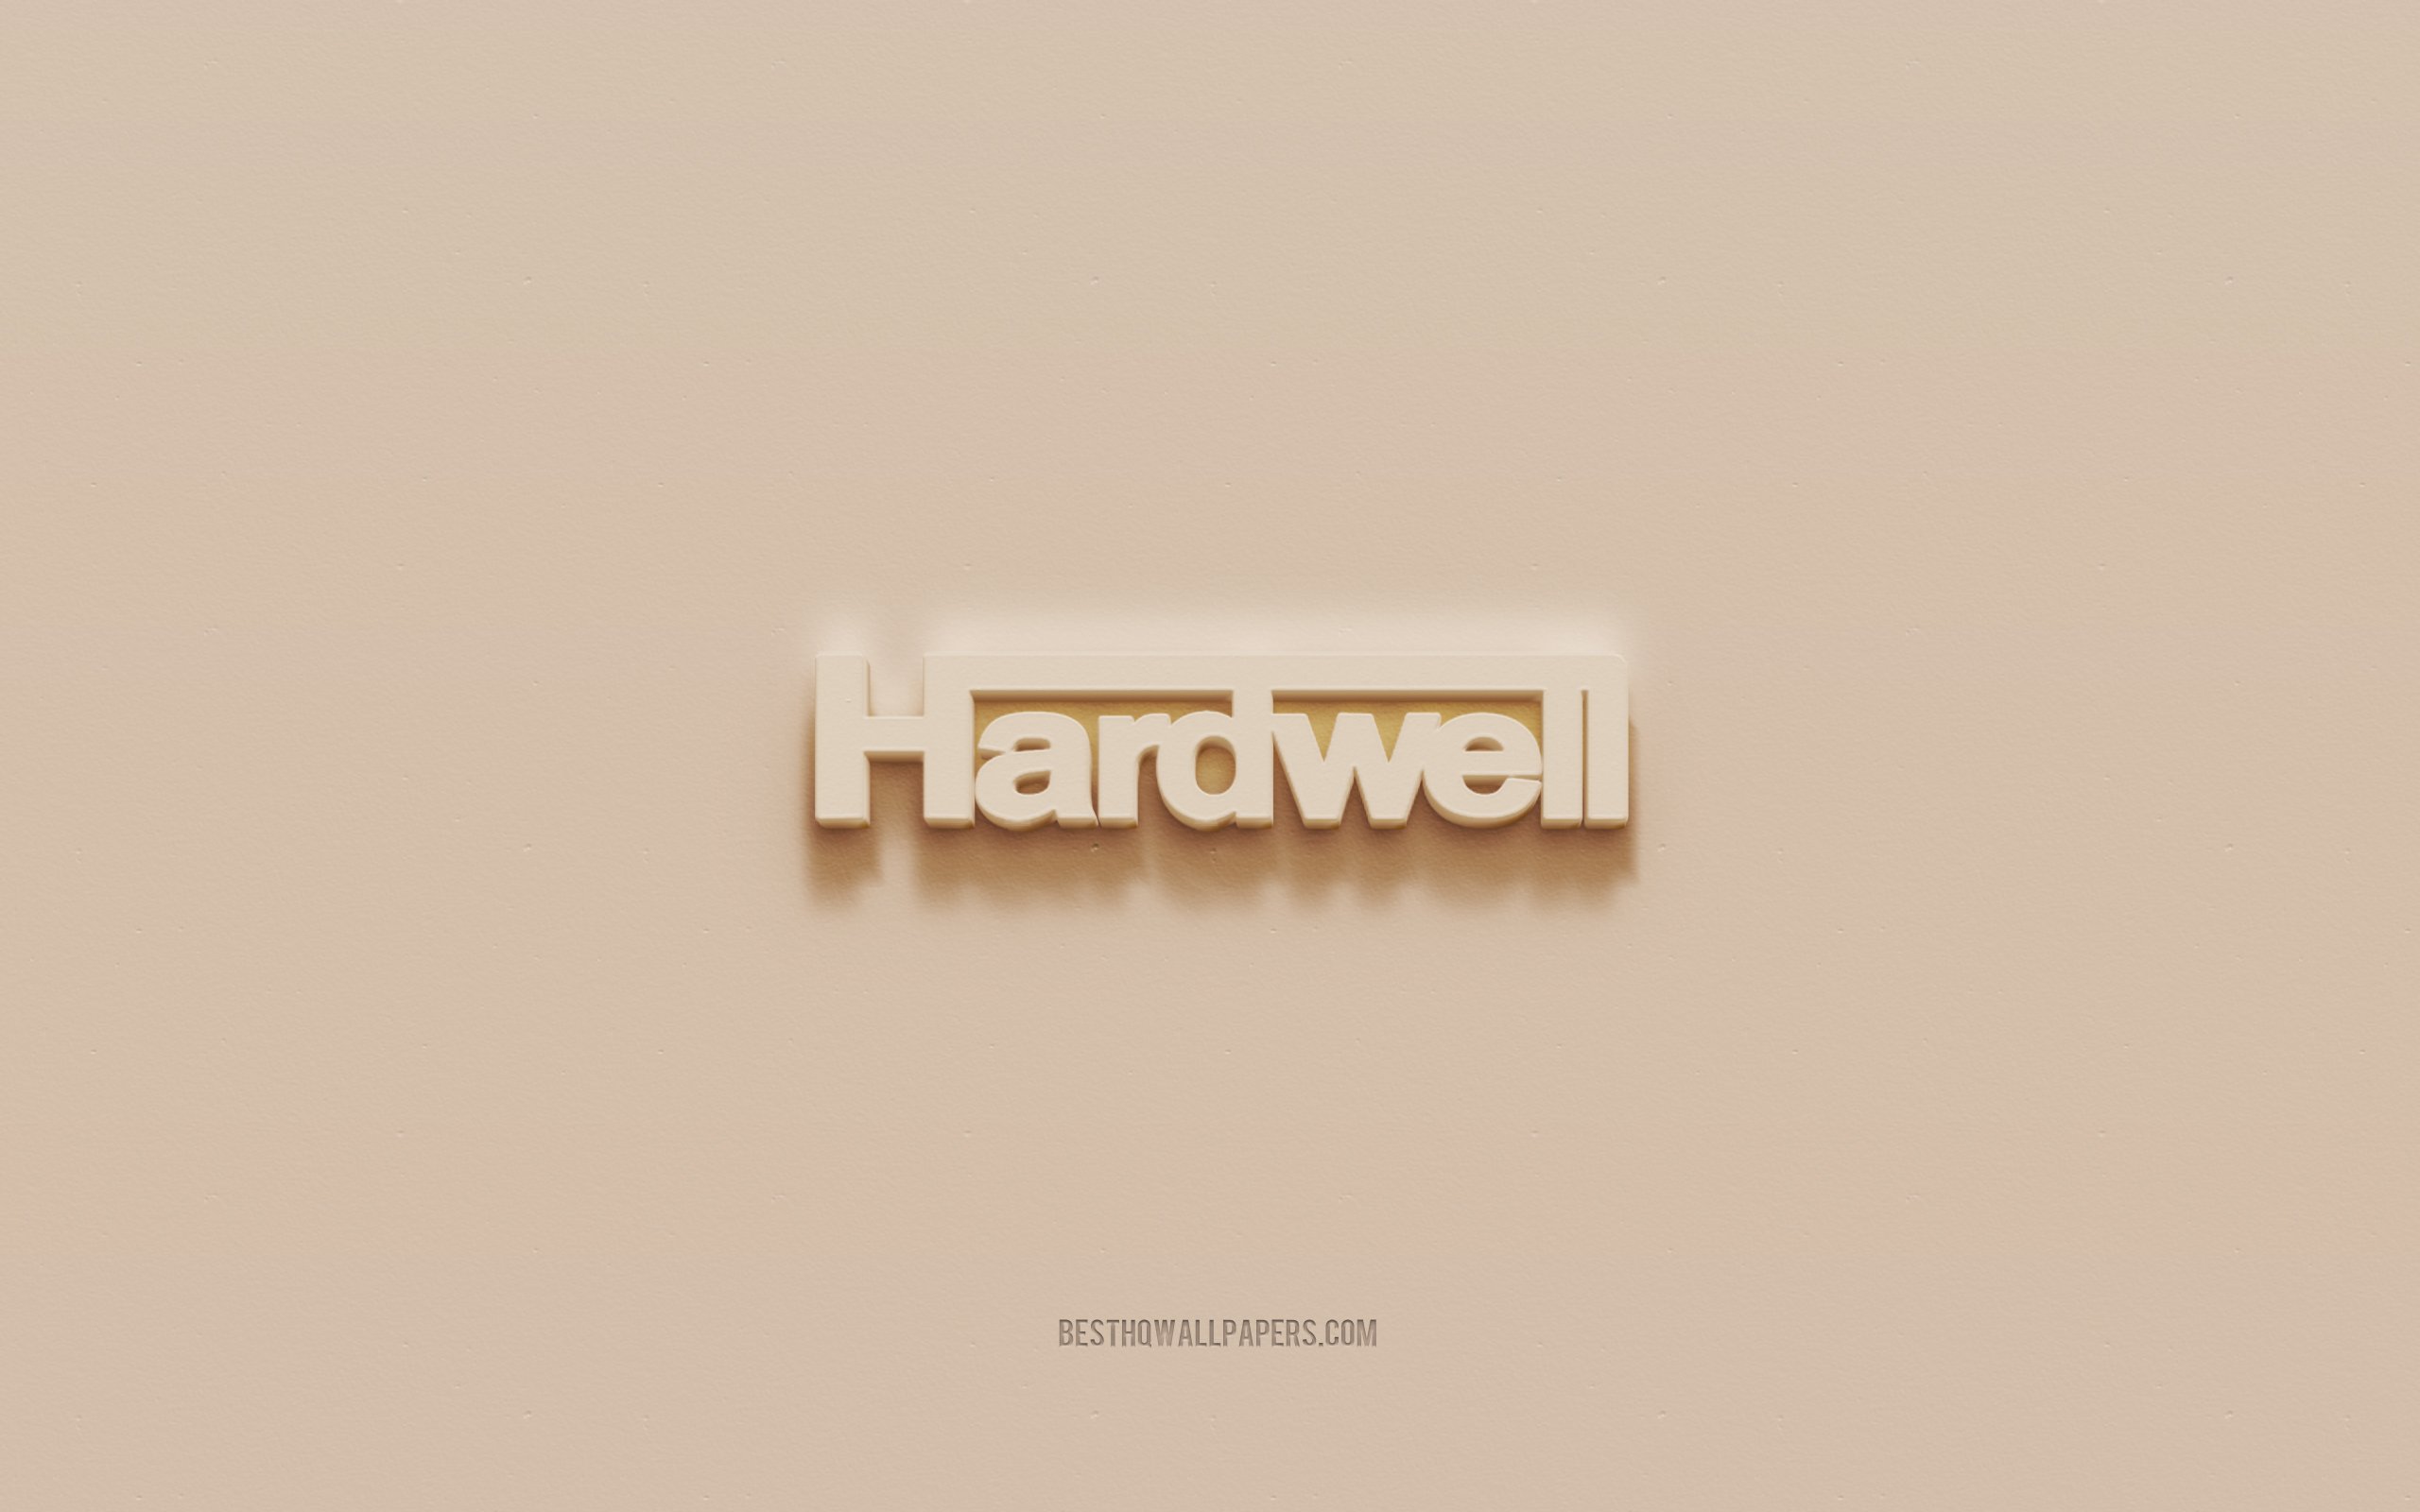 Download wallpaper Hardwell logo, brown plaster background, Hardwell 3D logo, musicians, Hardwell emblem, 3D art, Hardwell for desktop with resolution 2560x1600. High Quality HD picture wallpaper